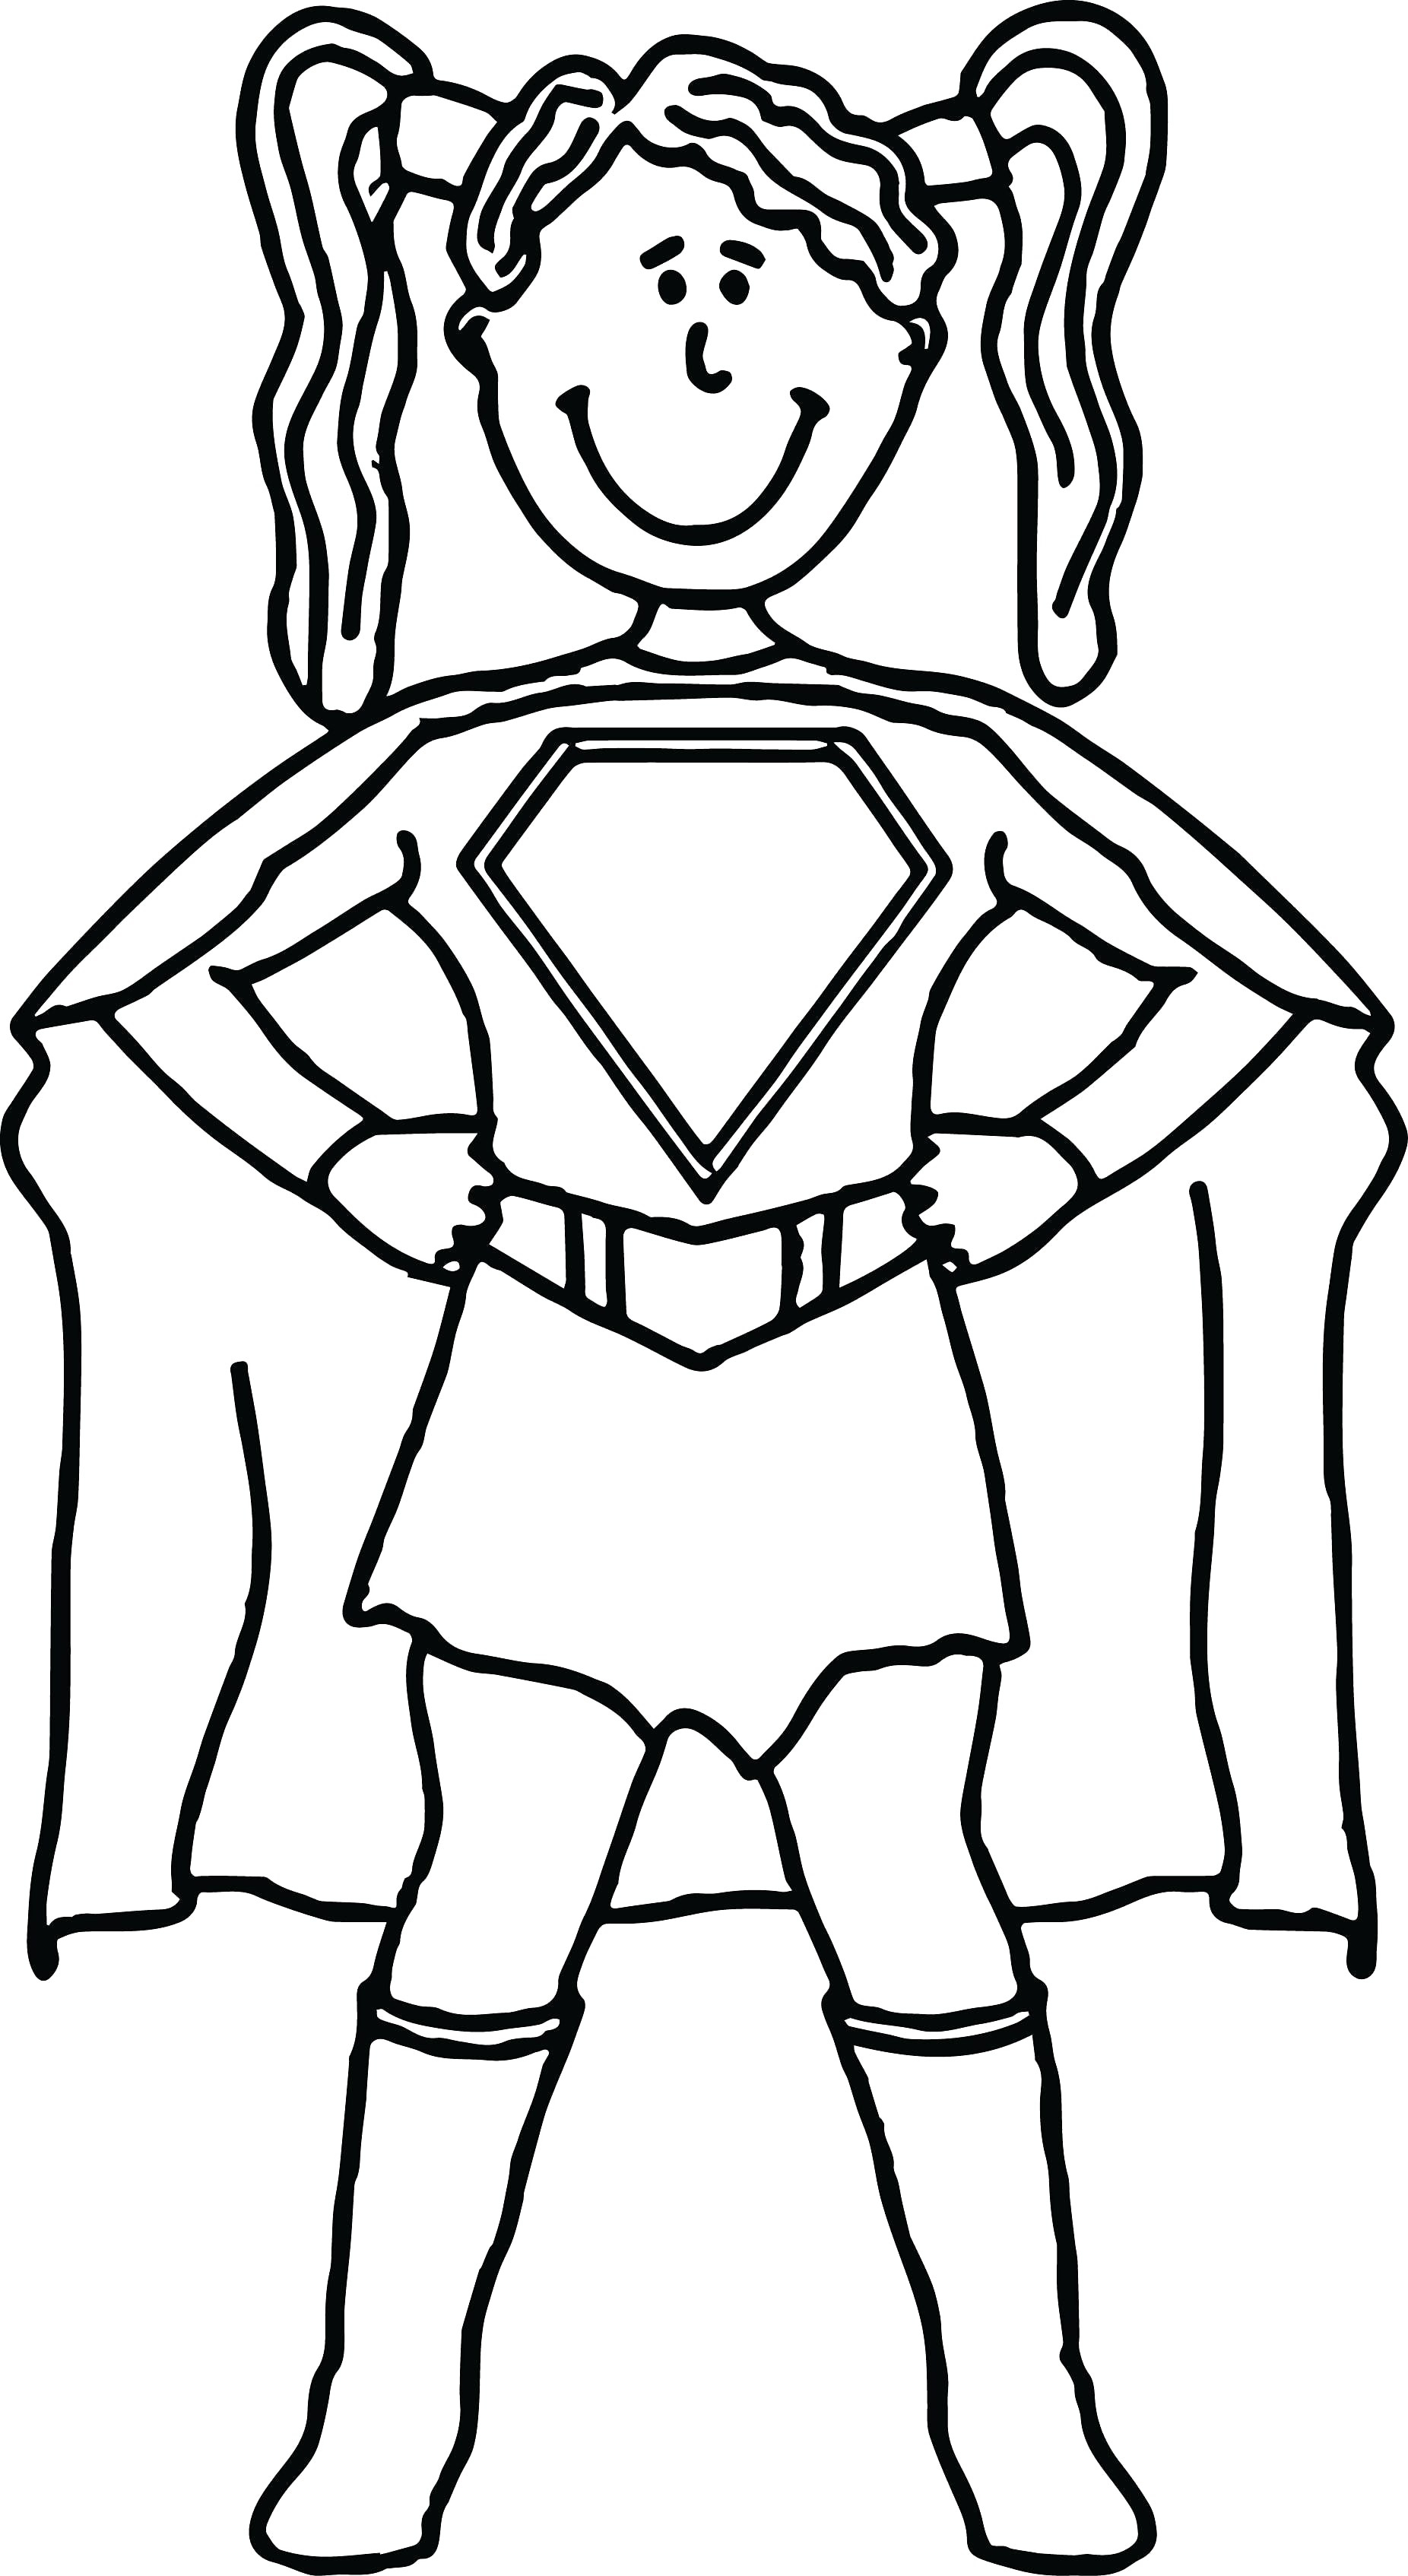 Super Hero Coloring Page Superheroes Super Girl Hero Coloring Page Best Free Coloring Pages